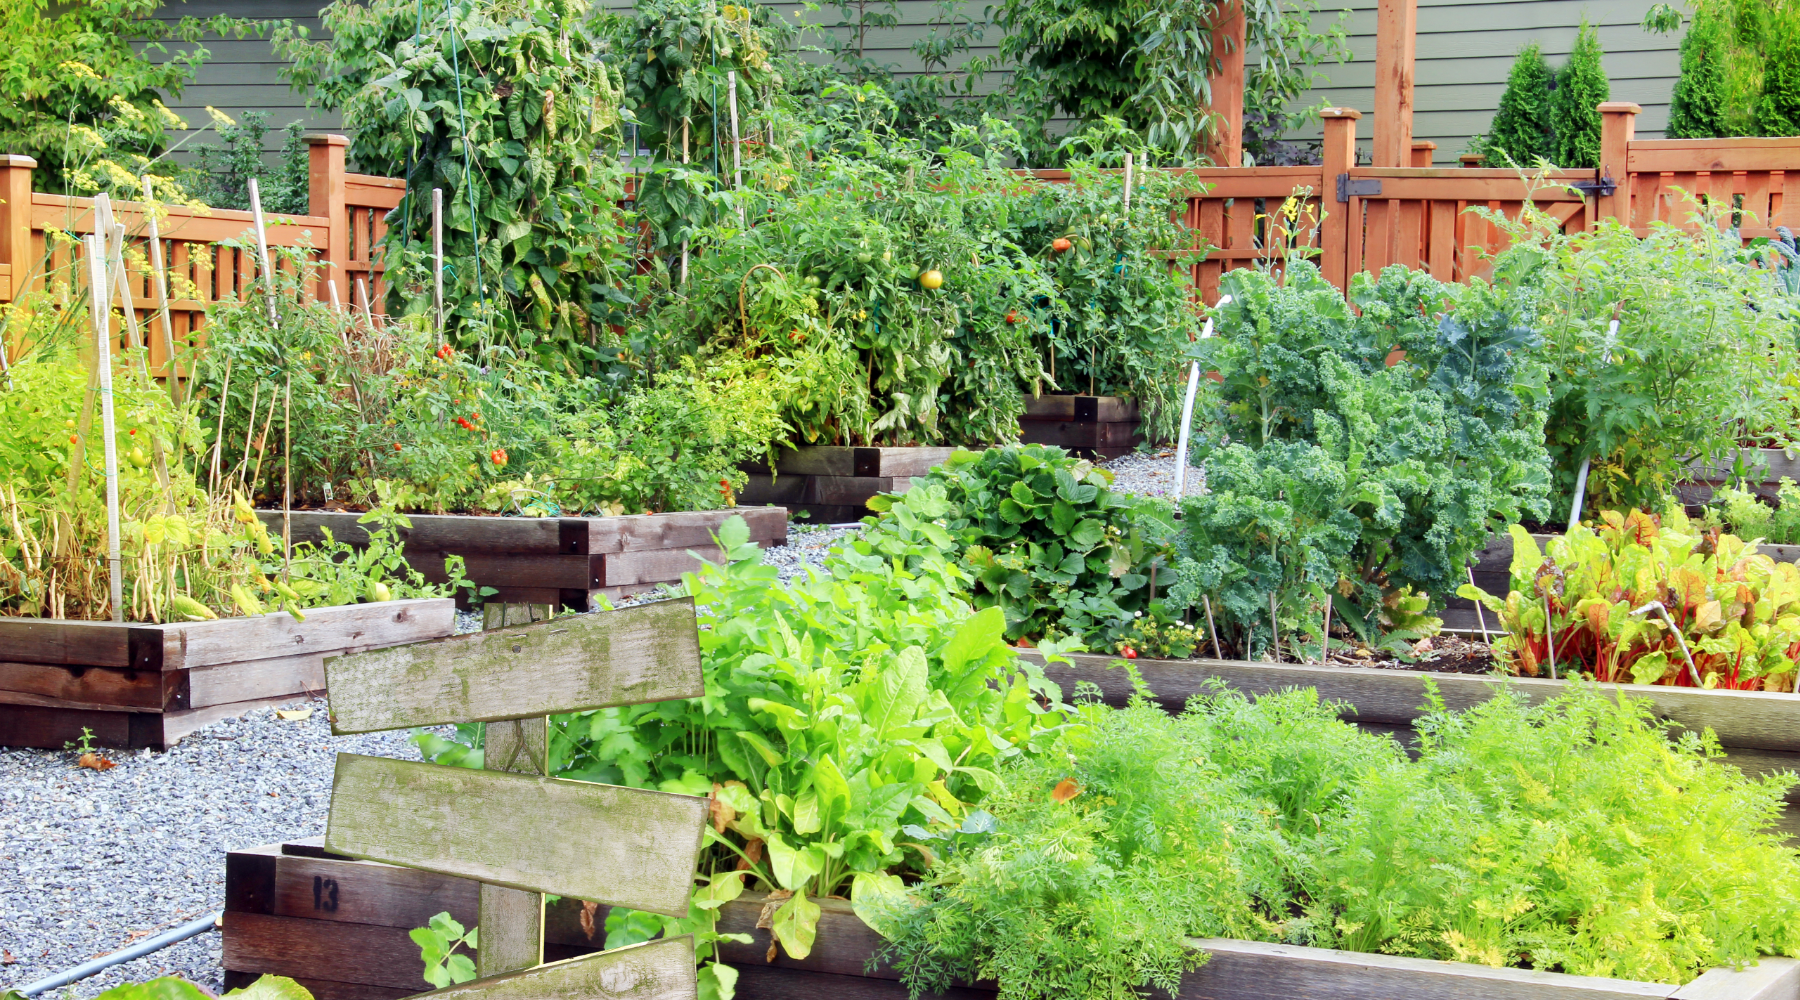 8 Benefits of Community Gardens